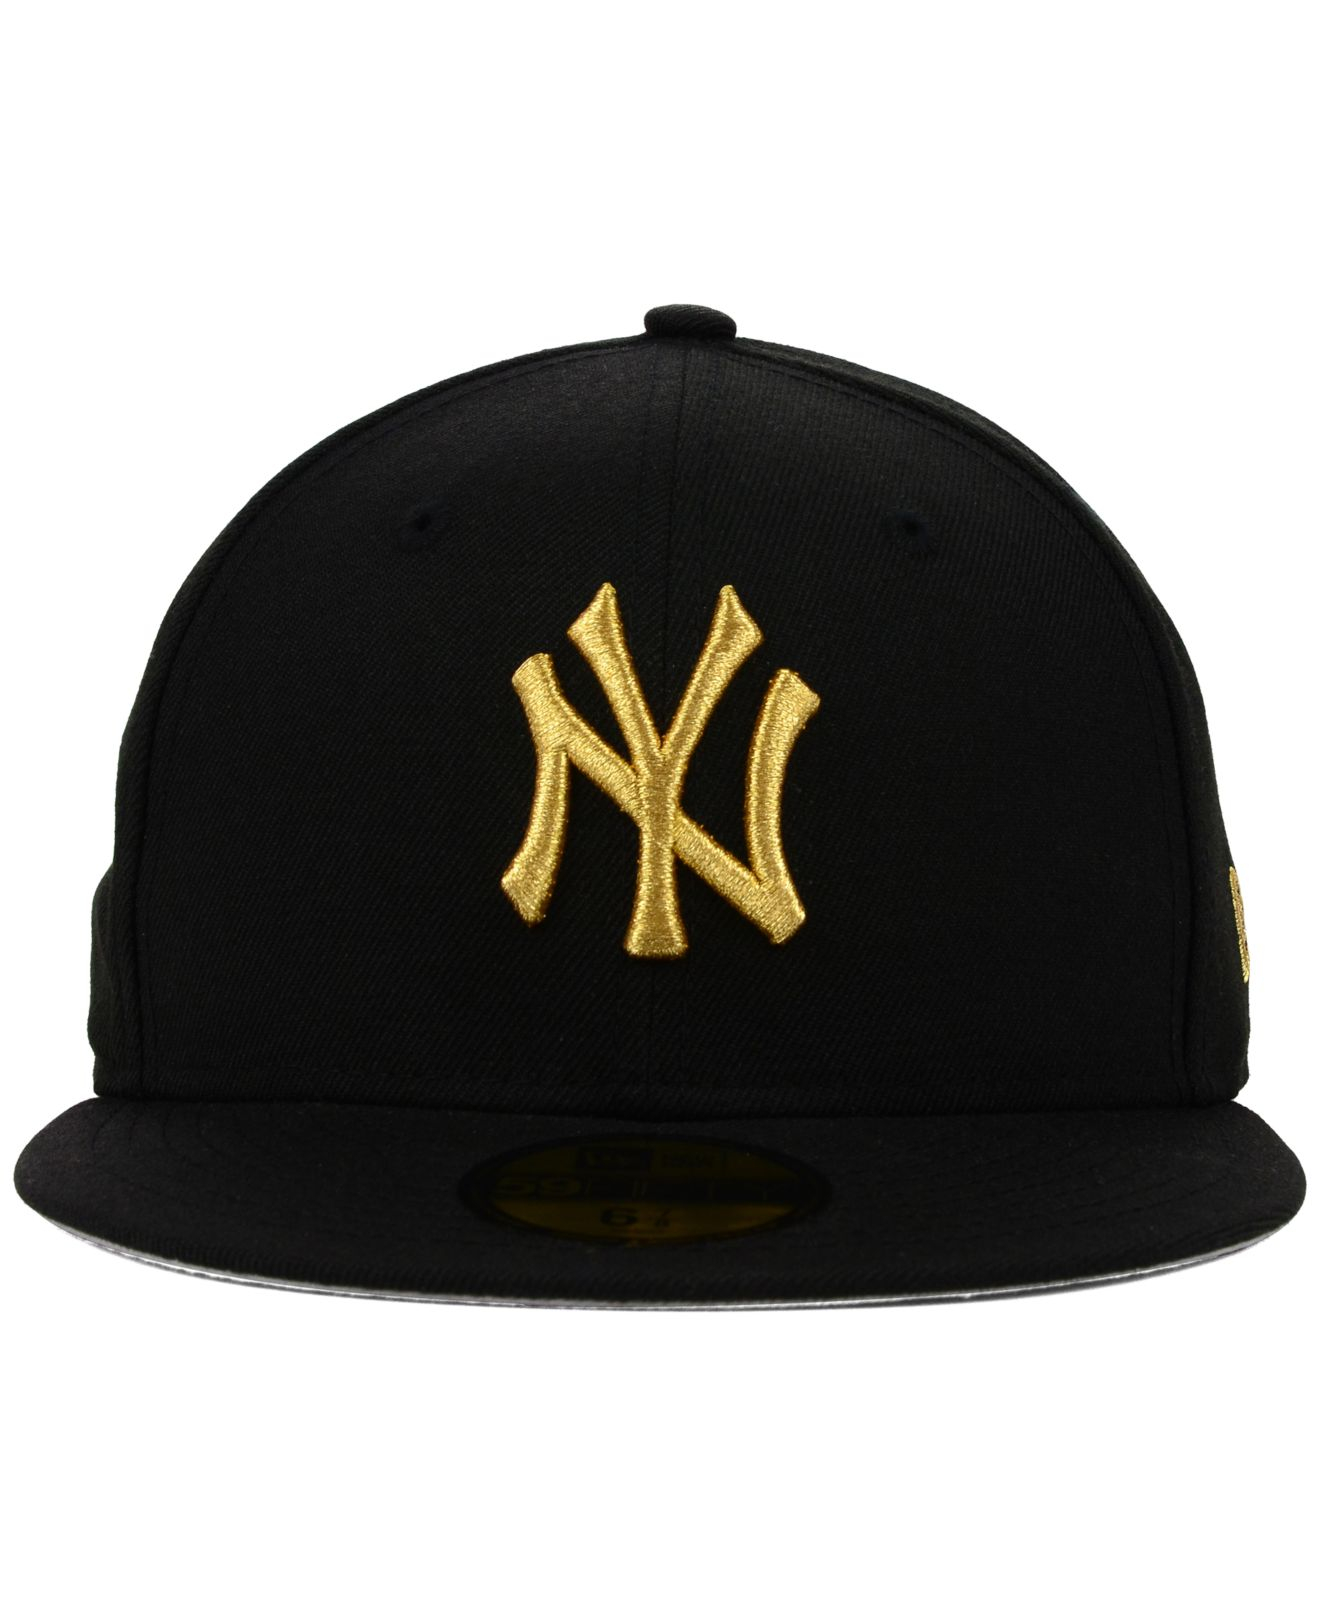 Lyst - Ktz New York Yankees Gold 59fifty Cap in Black for Men